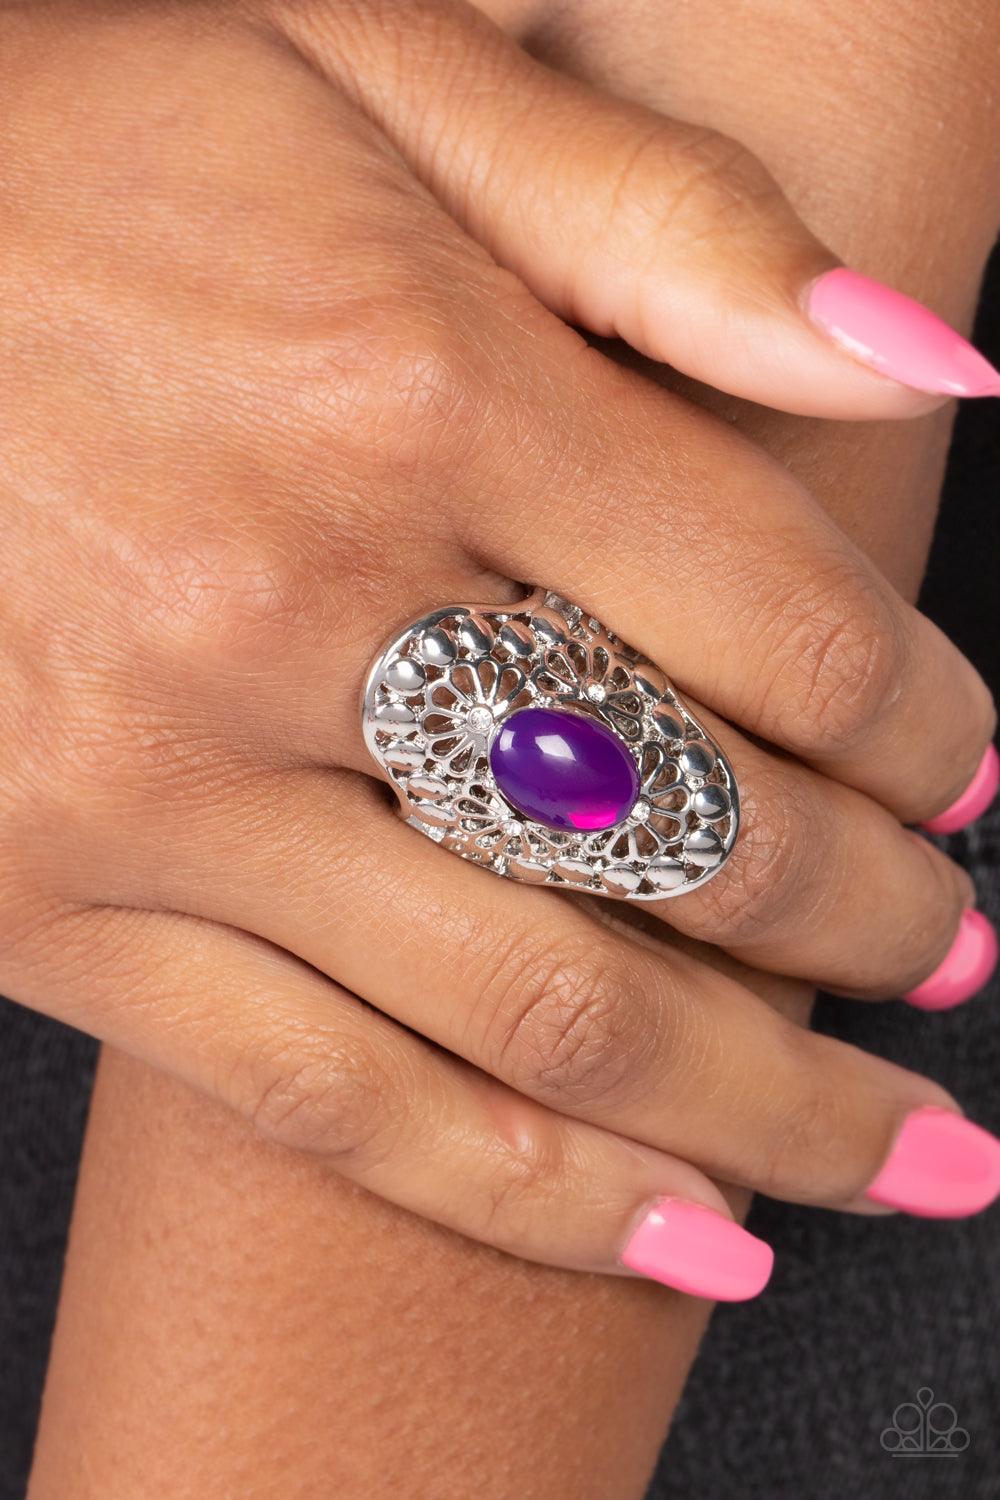 Mexican Magic Purple Ring - Jewelry by Bretta